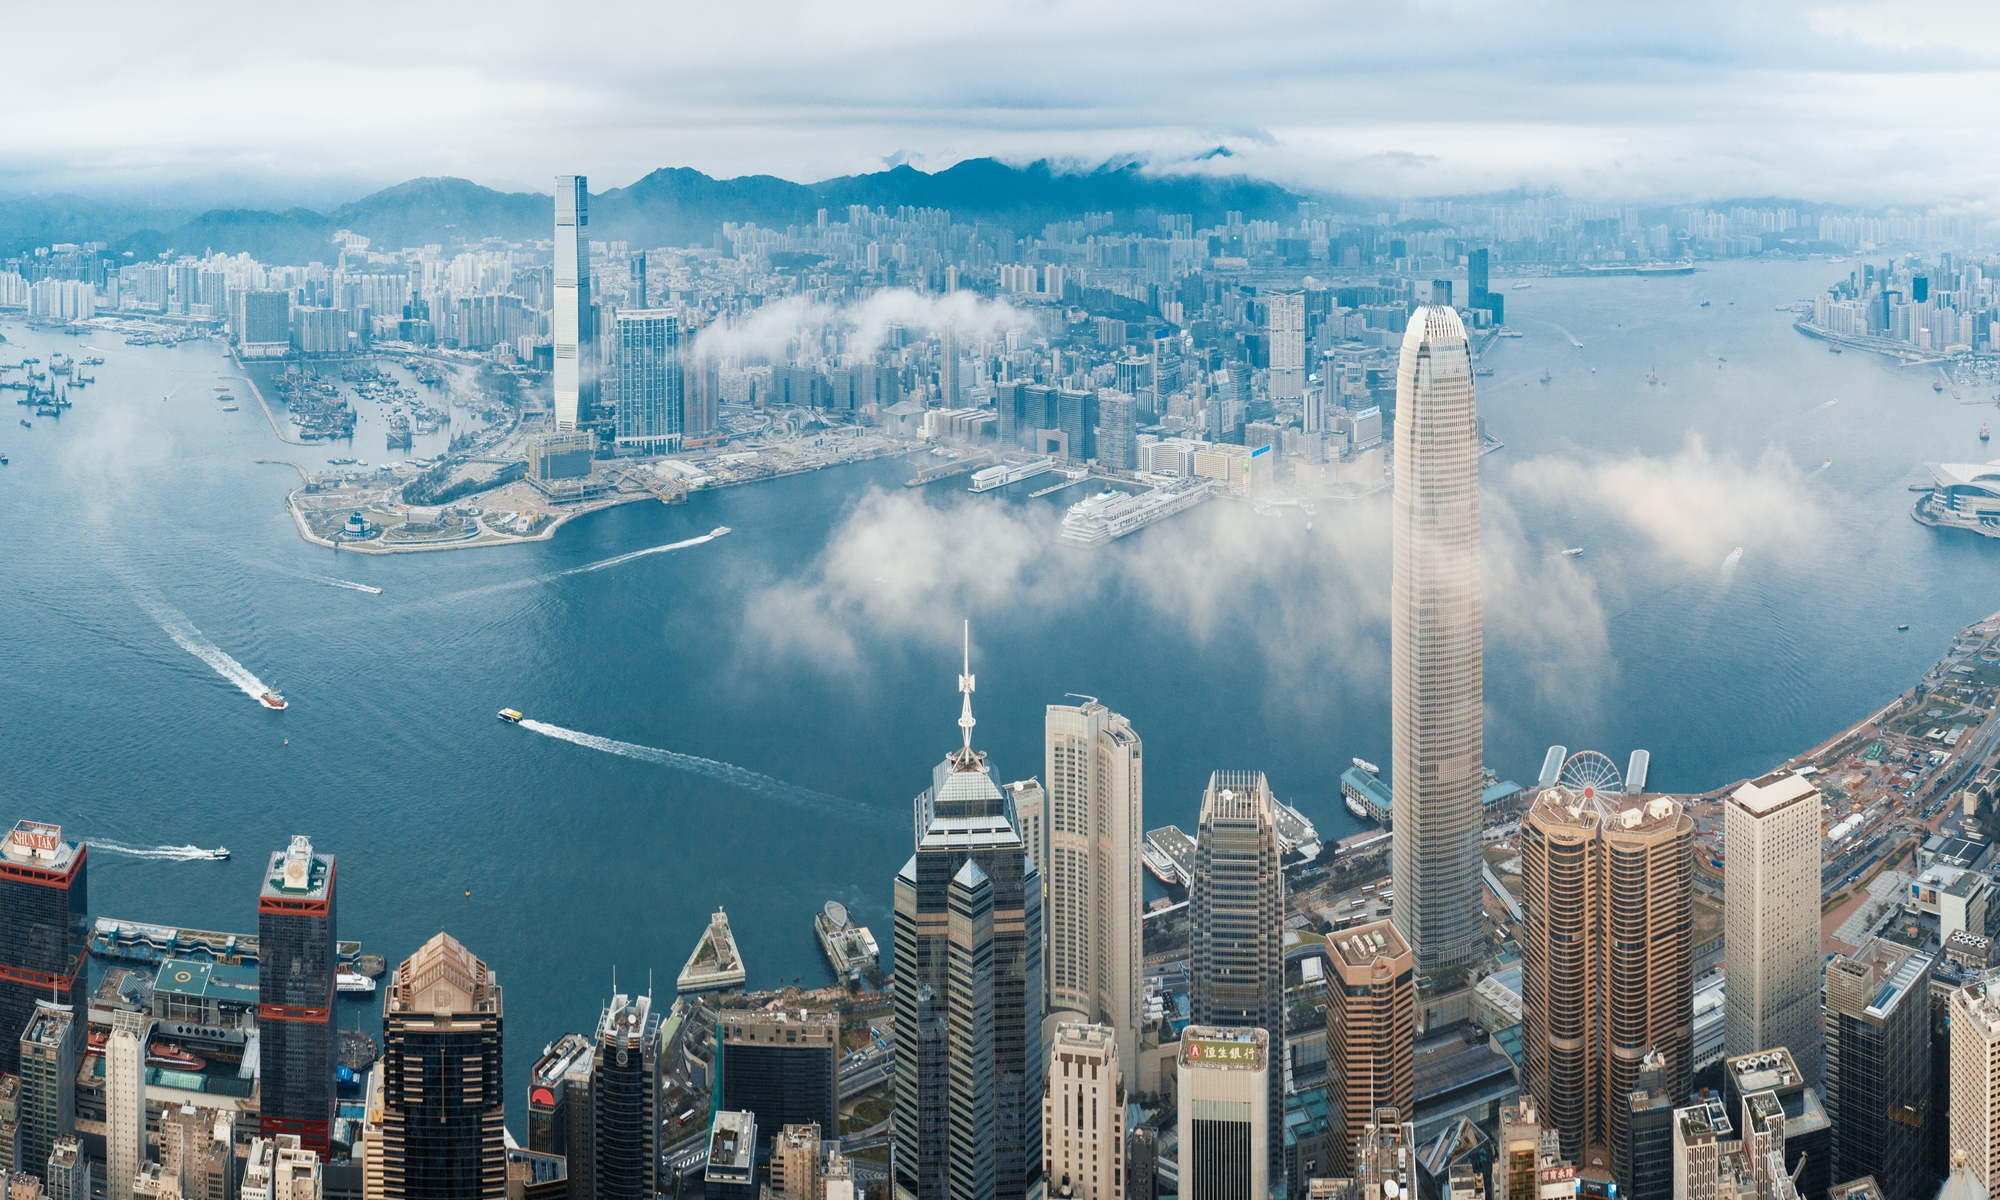 The view of Hong Kong Photo: VCG